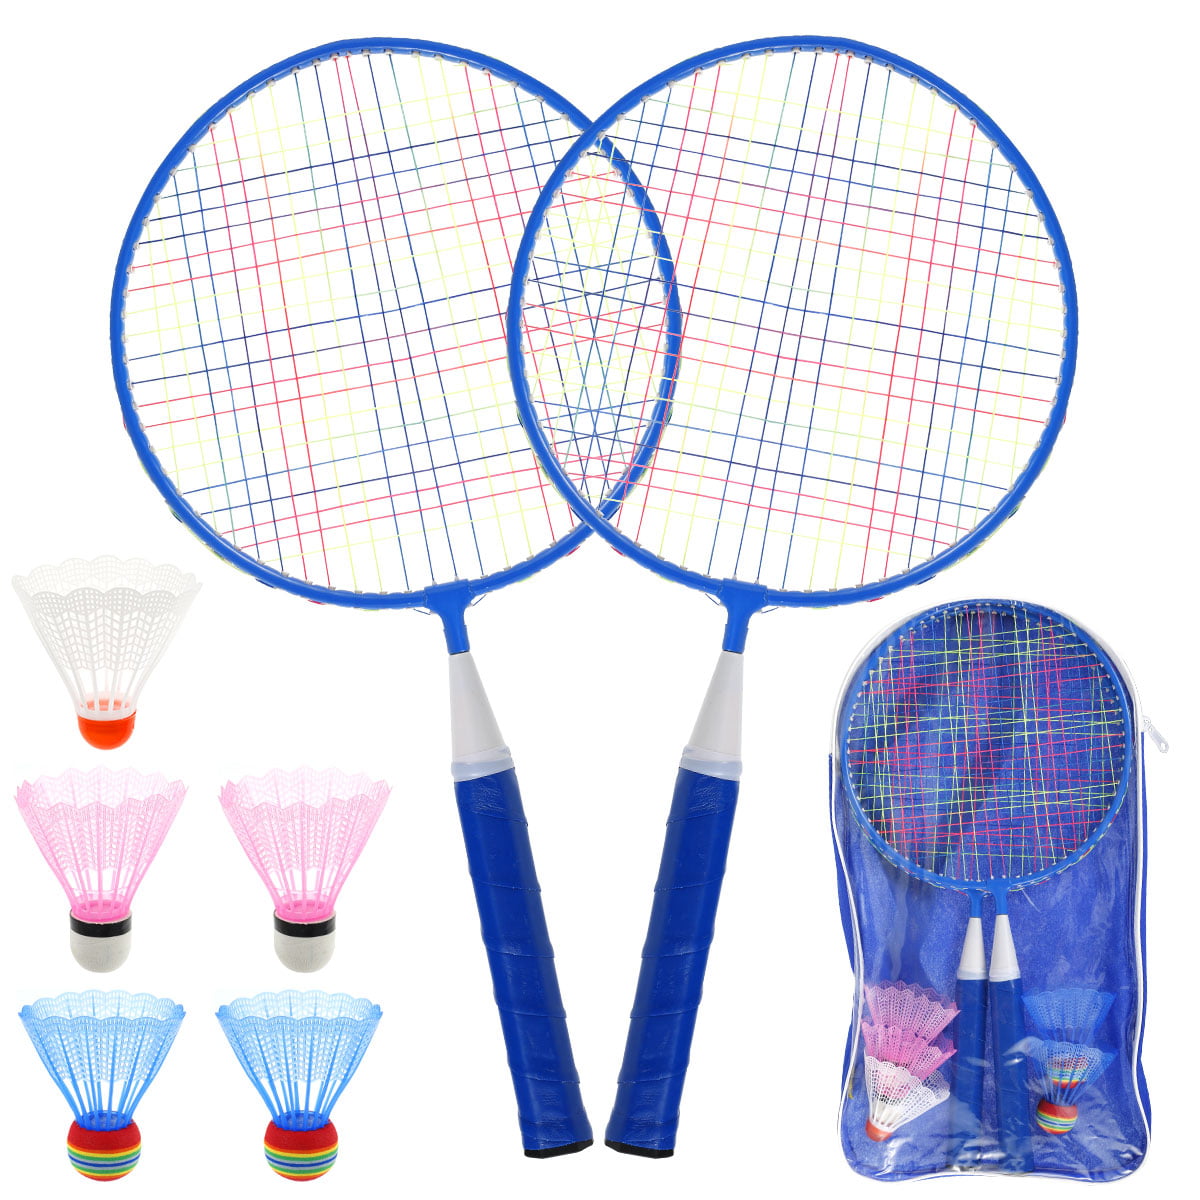 Carbon Shaft Badminton Racket Set of 4 for Backyard Family Game w/ Carry Bag 